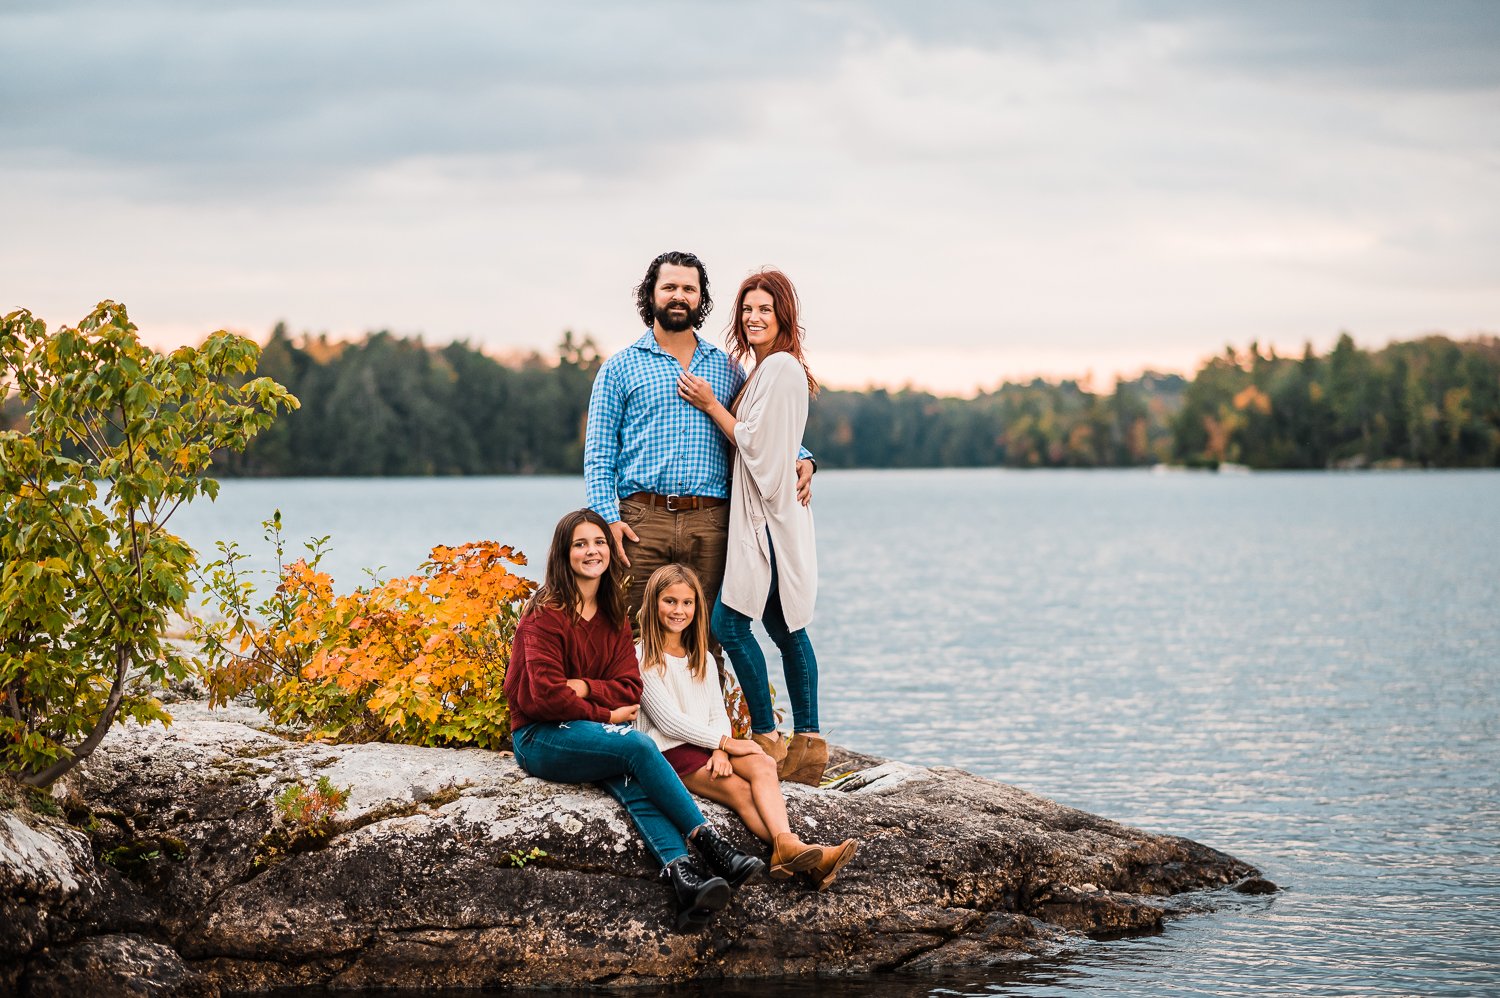 Cobbosseecontee Lake Family Photos | The Stewart Family